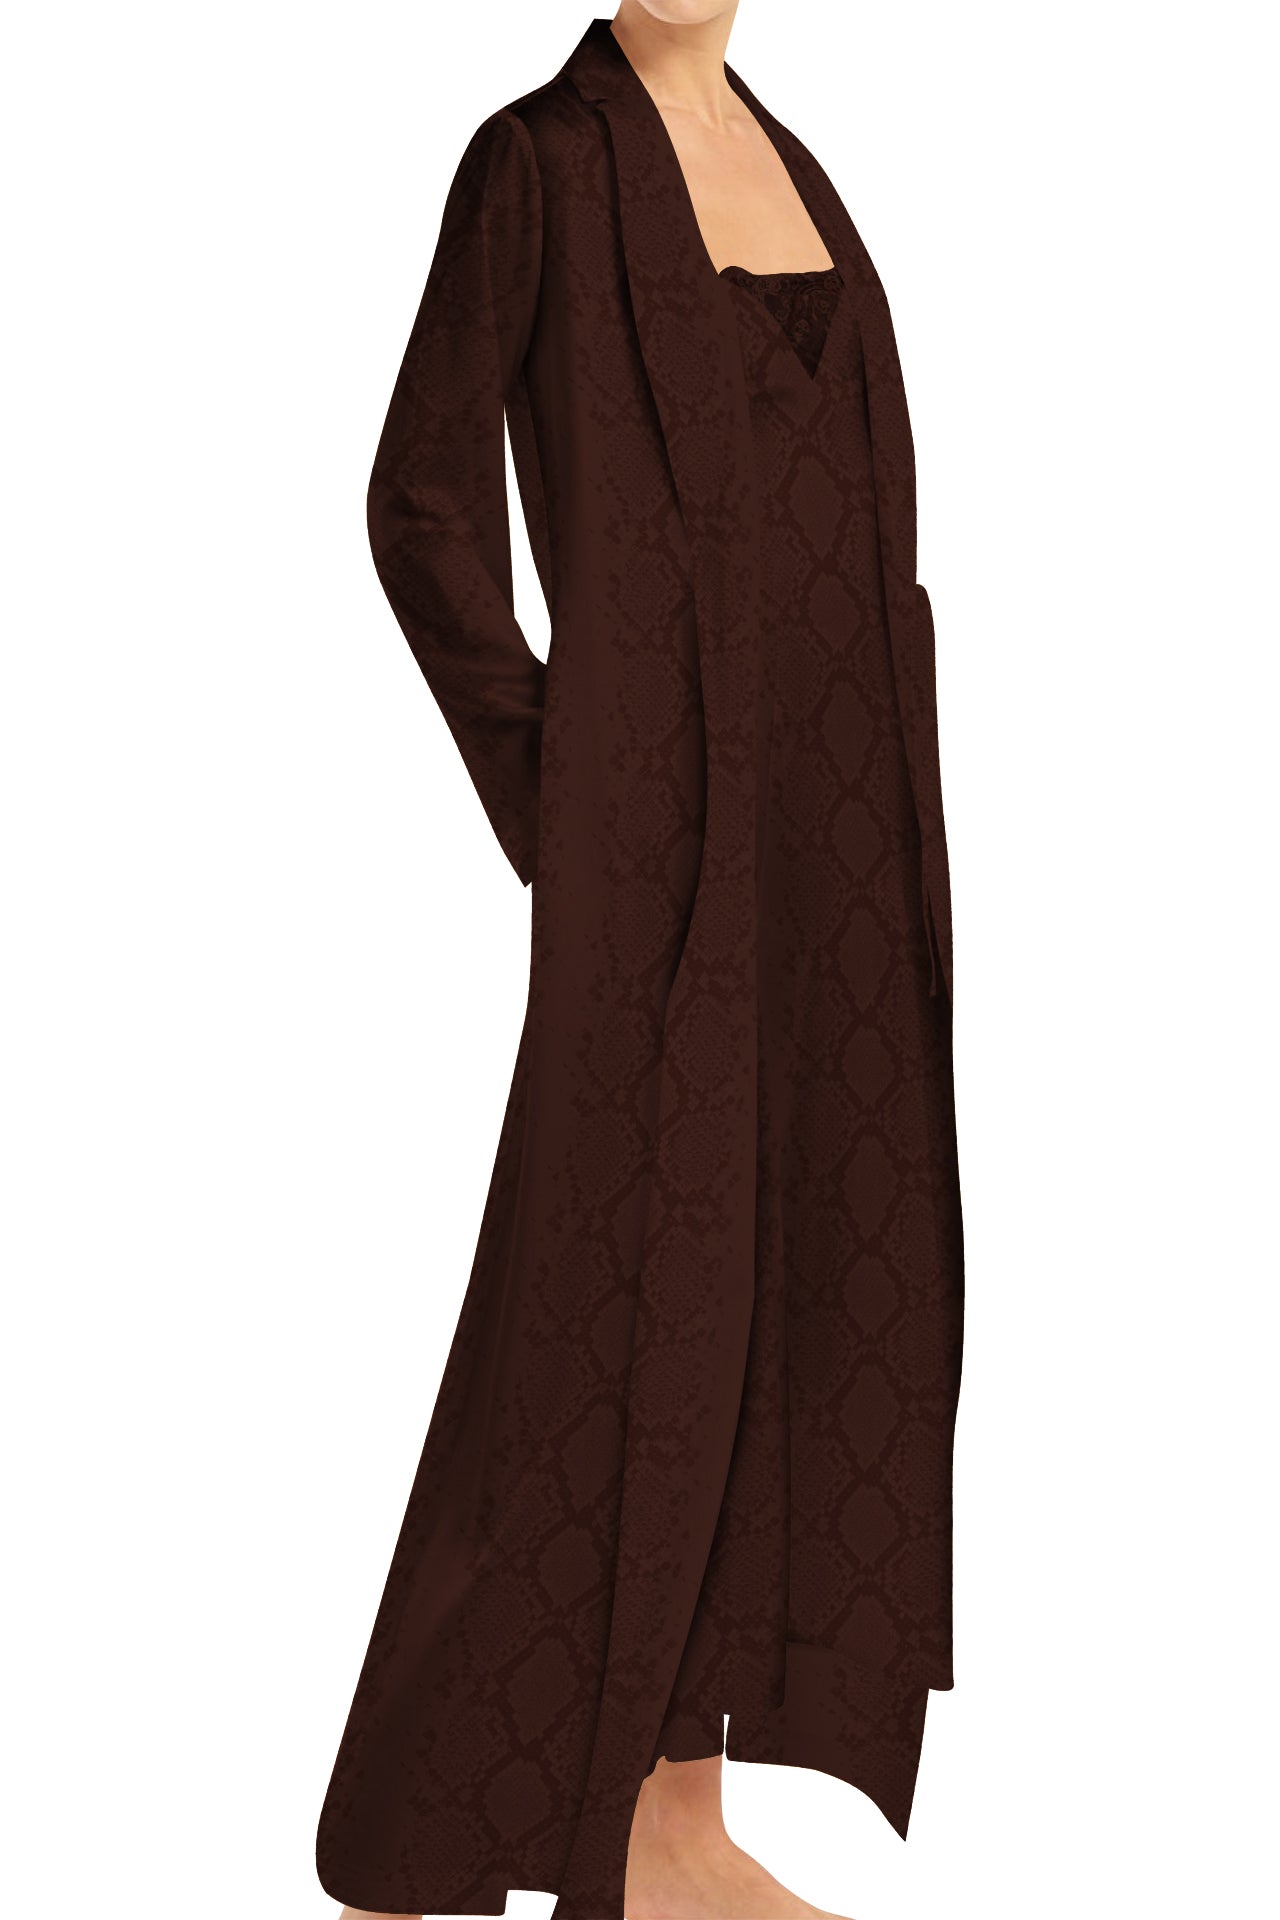 "Kyle X Shahida" "womens wrap dress long sleeve" "snakeskin print dress" "wrap brown dress"